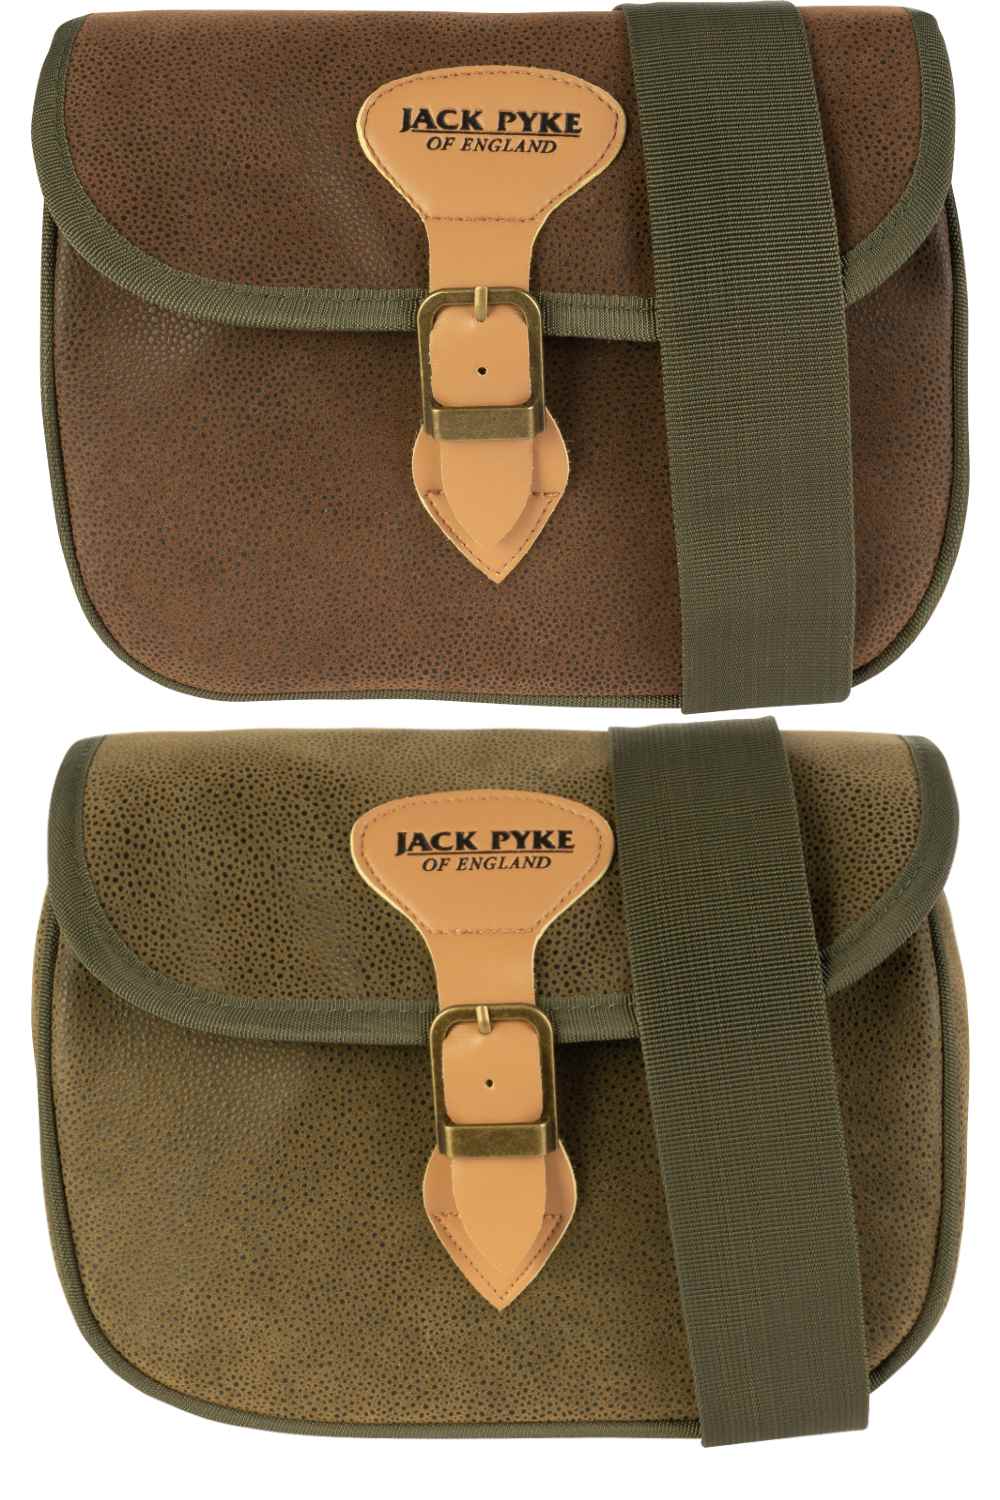 Jack Pyke Duotex Speed Loader Cartridge Bag in Brown and Green 